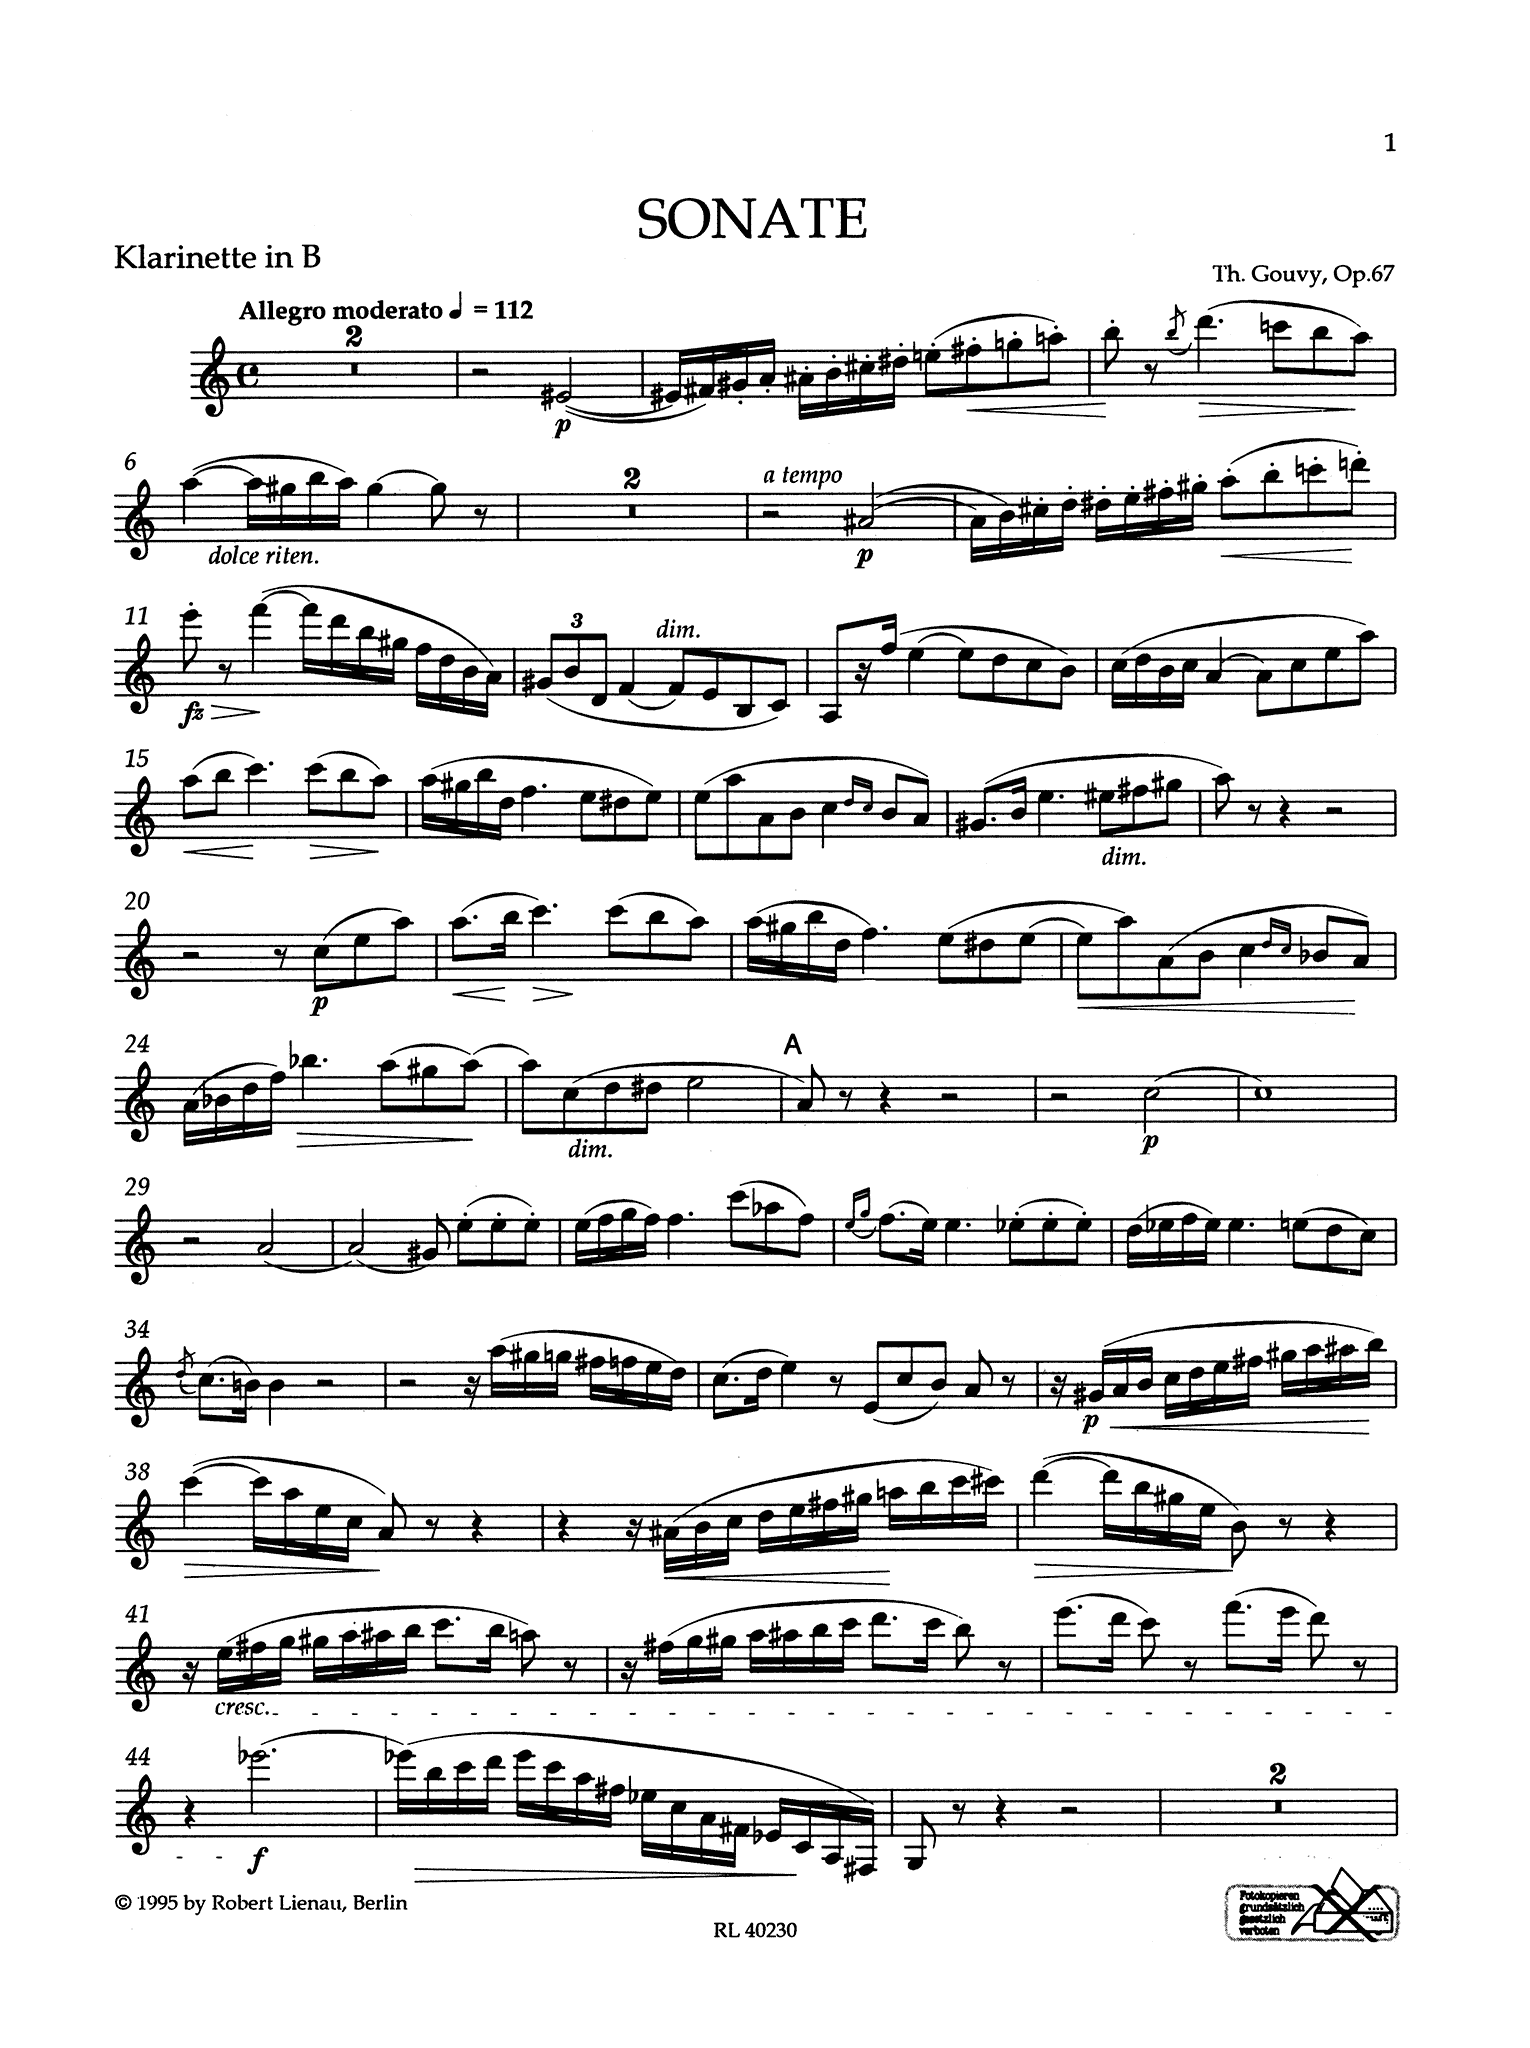 Gouvy Sonata, Op. 67 clarinet part